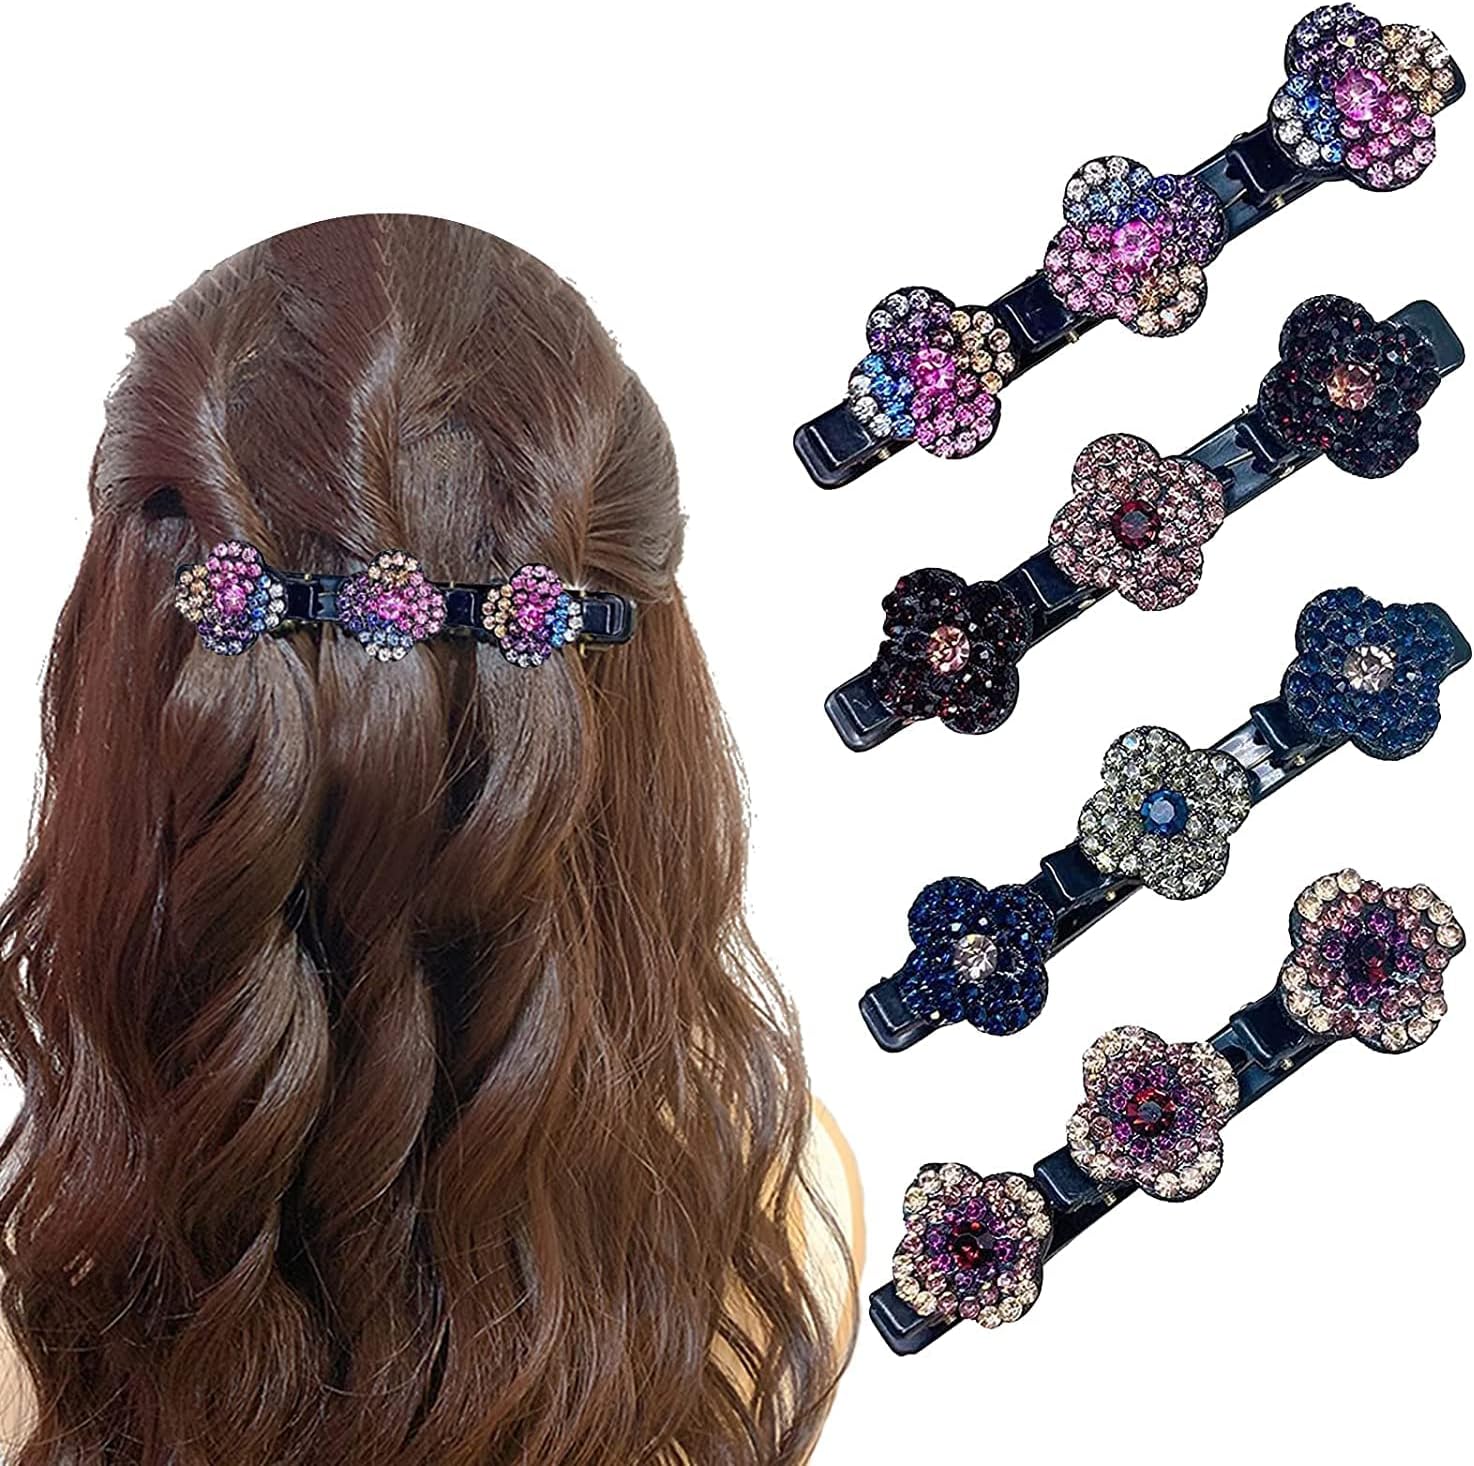 Satin Fabric Hair Bands, Four-Leaf Clover Chopped Hairpin Duckbill Clip, Braided Hair Clip with Rhinestones for Women/Girls (4pcs)